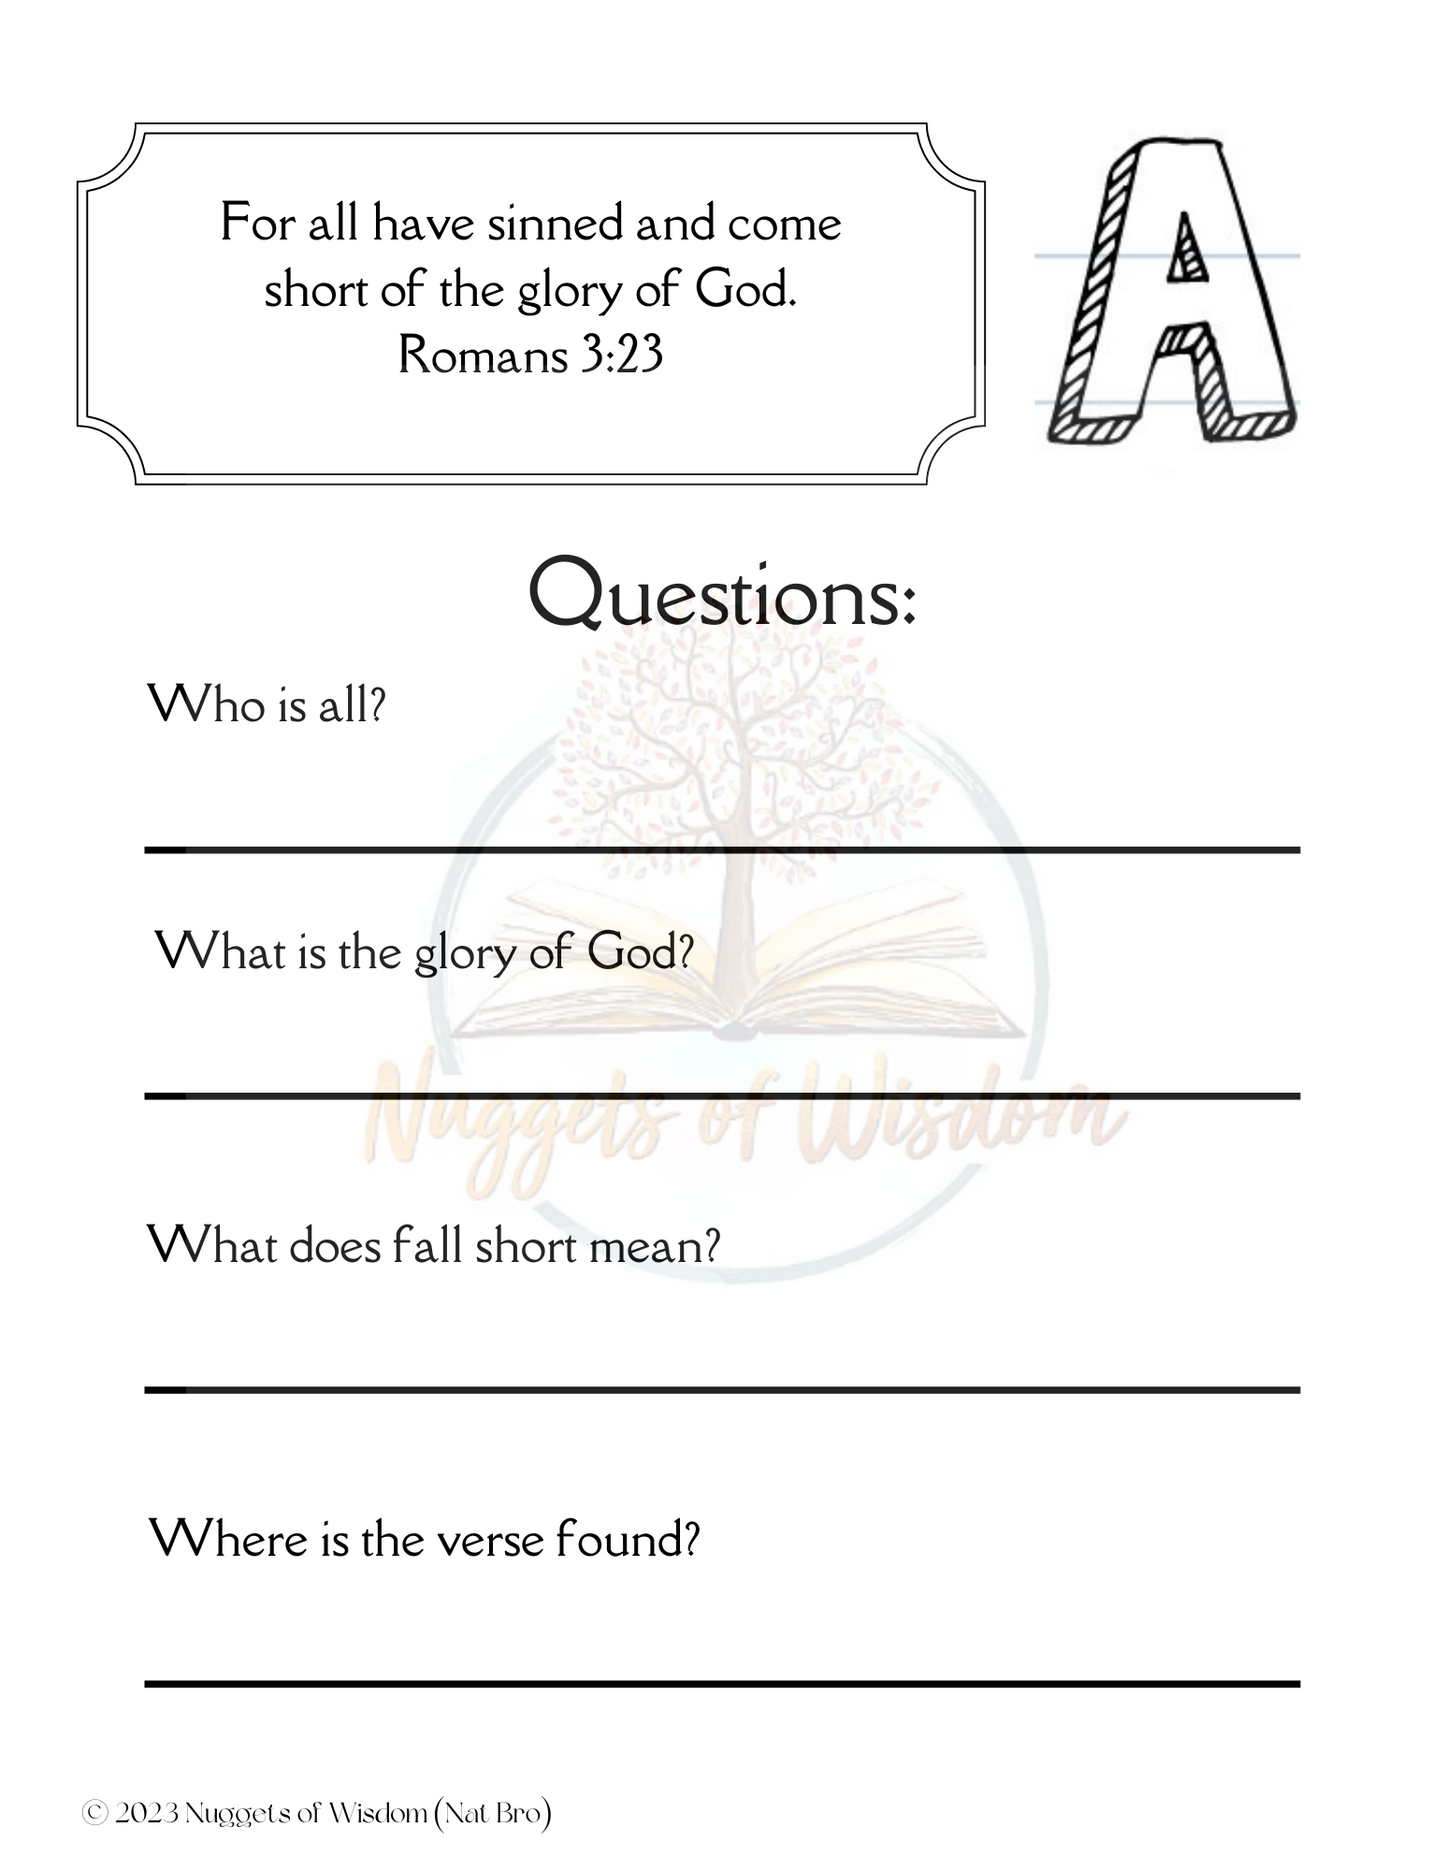 ABC's Bible Verses KJV Copy Work For 3-6th Grades